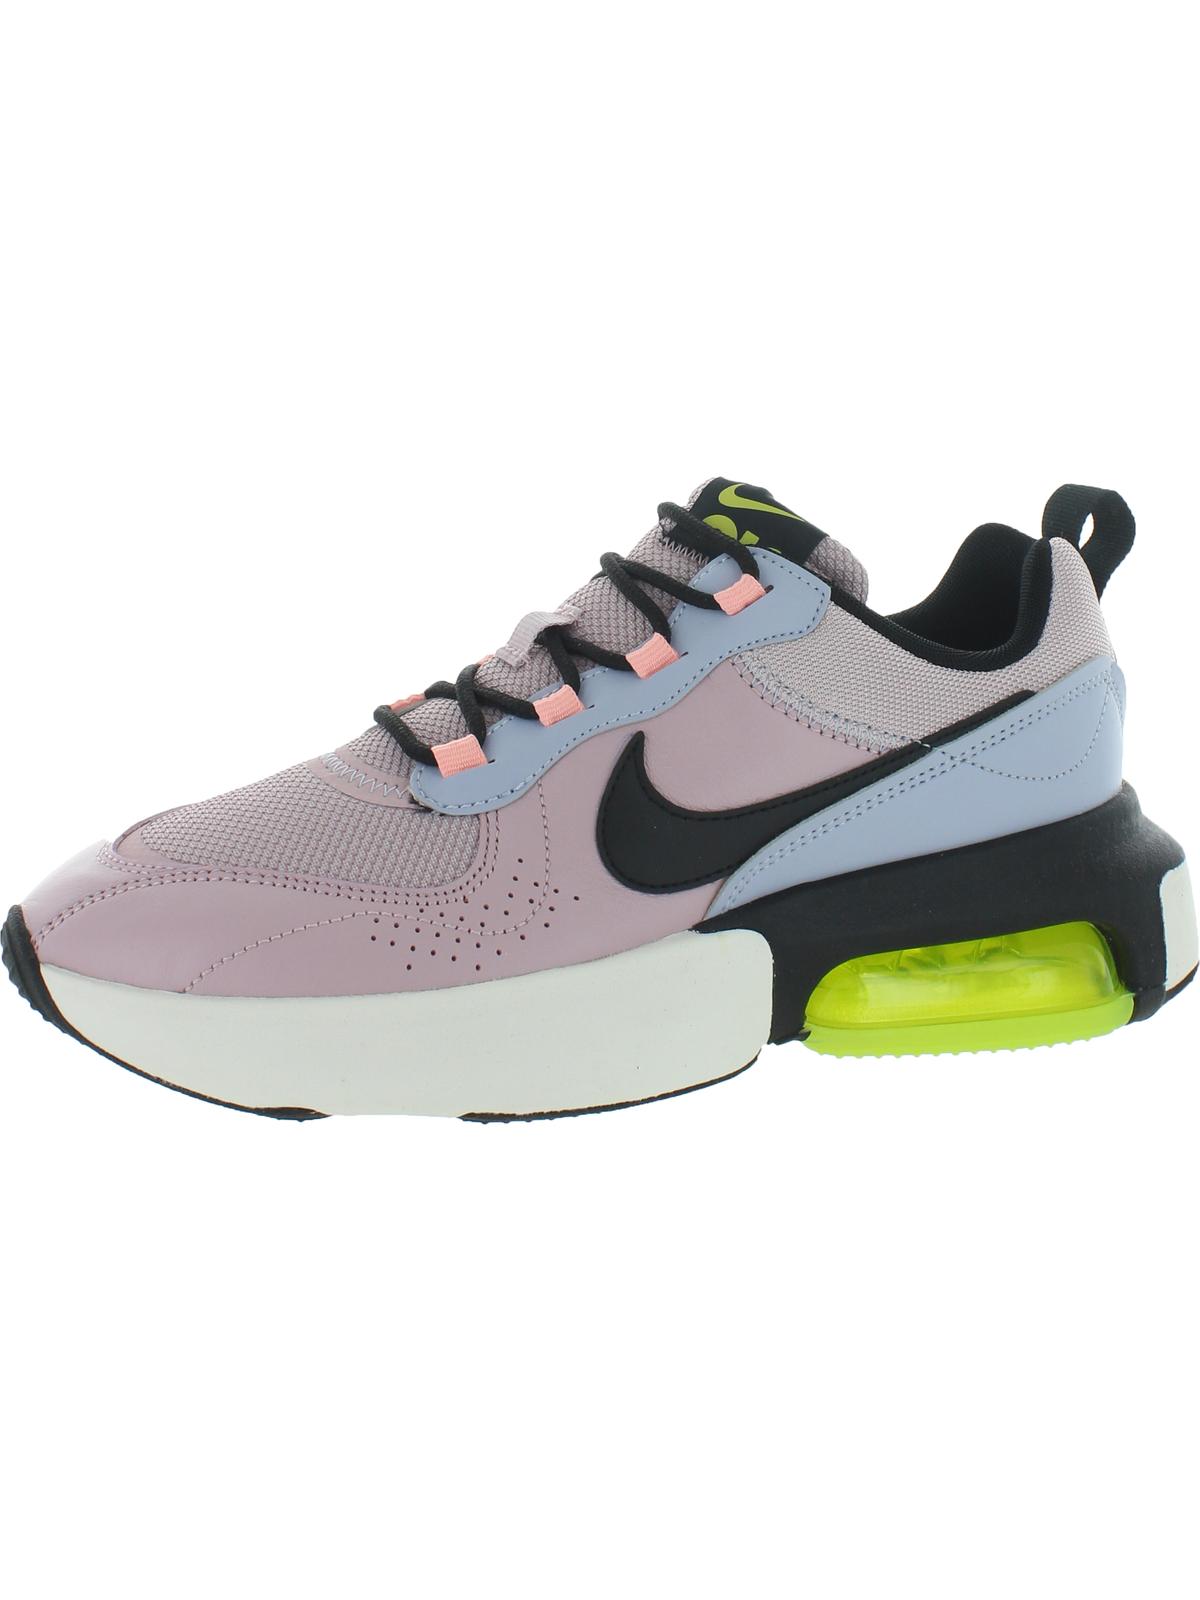 Nike Womens Air Max Verona Lifestyle Gym Athletic Shoes Pink 8 Medium (B,M) - image 1 of 2